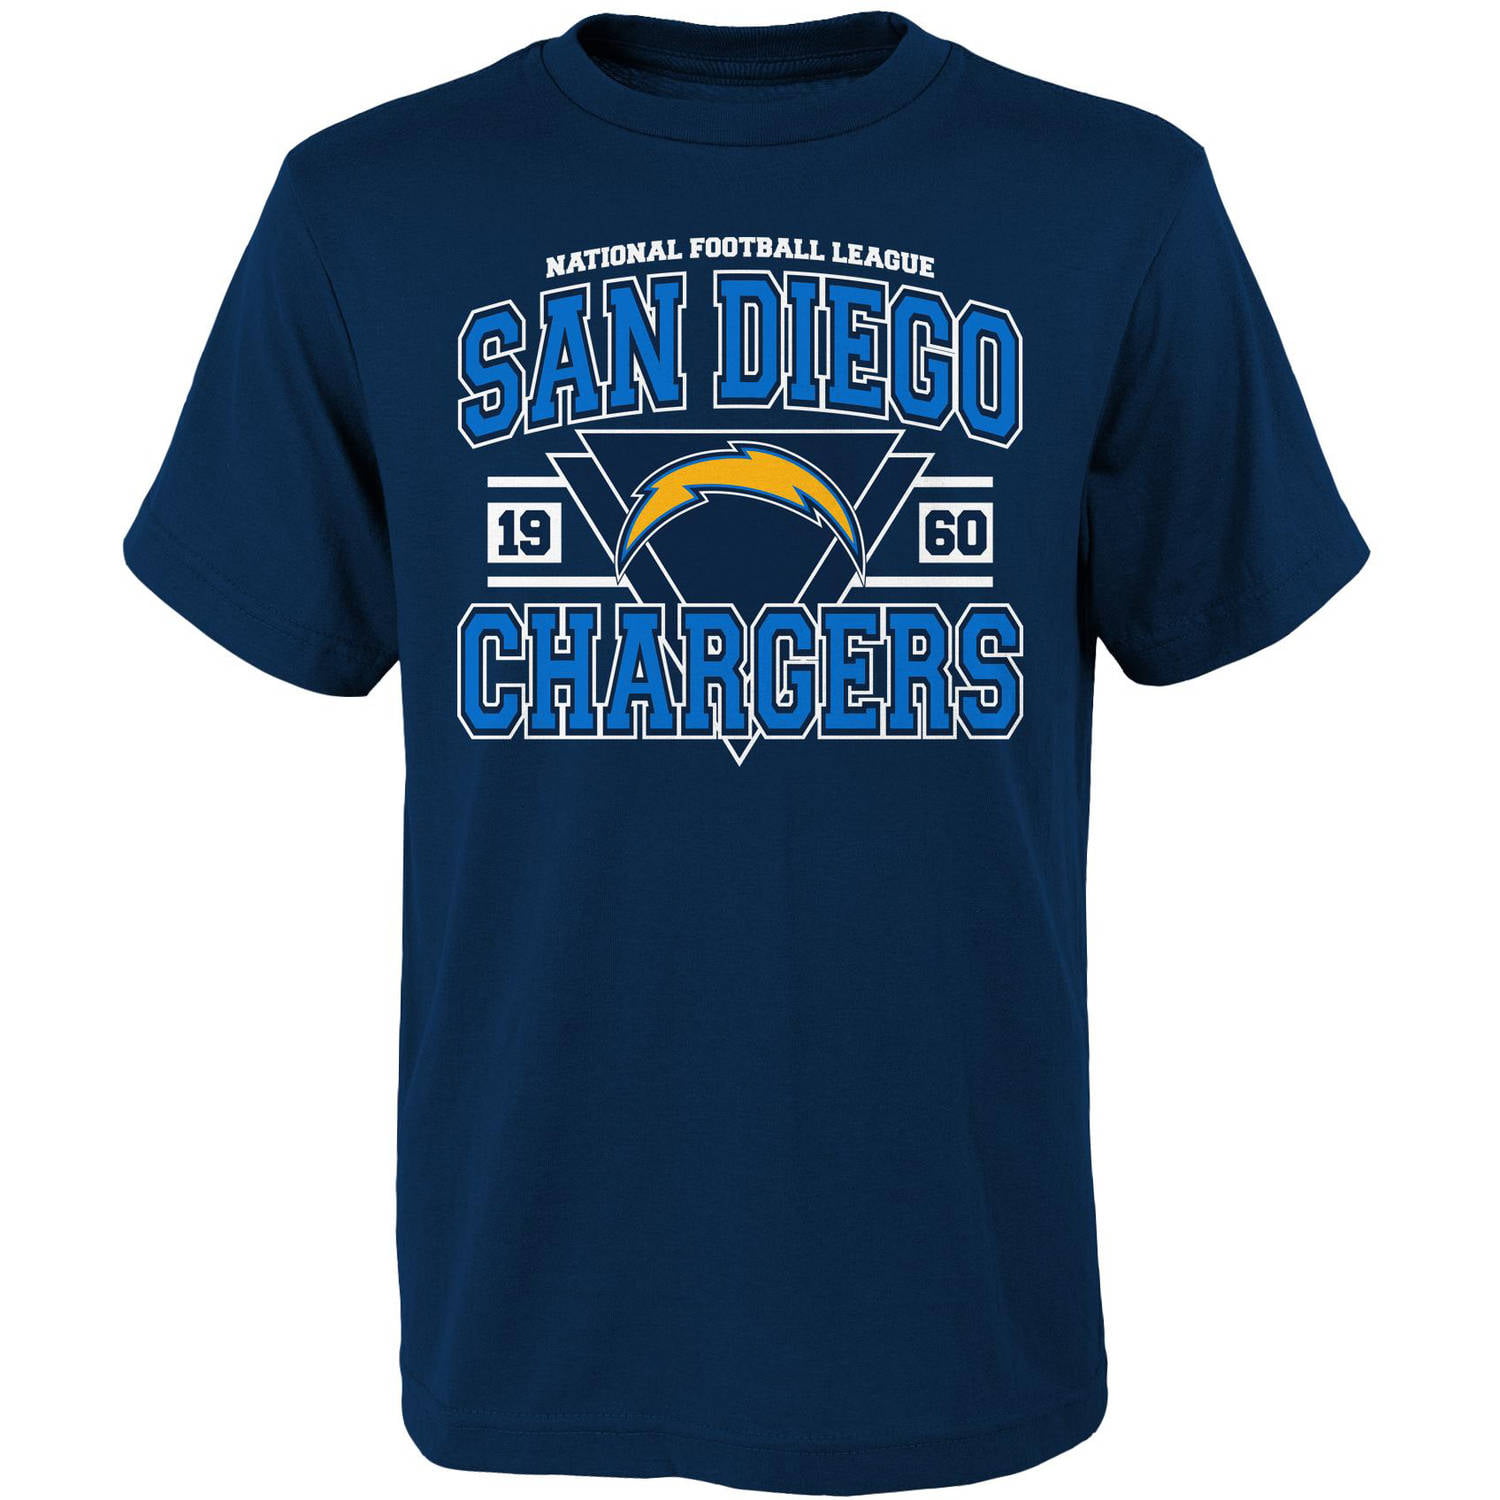 NFL Boys' San Diego Chargers Short Sleeve Team Tee - Walmart.com